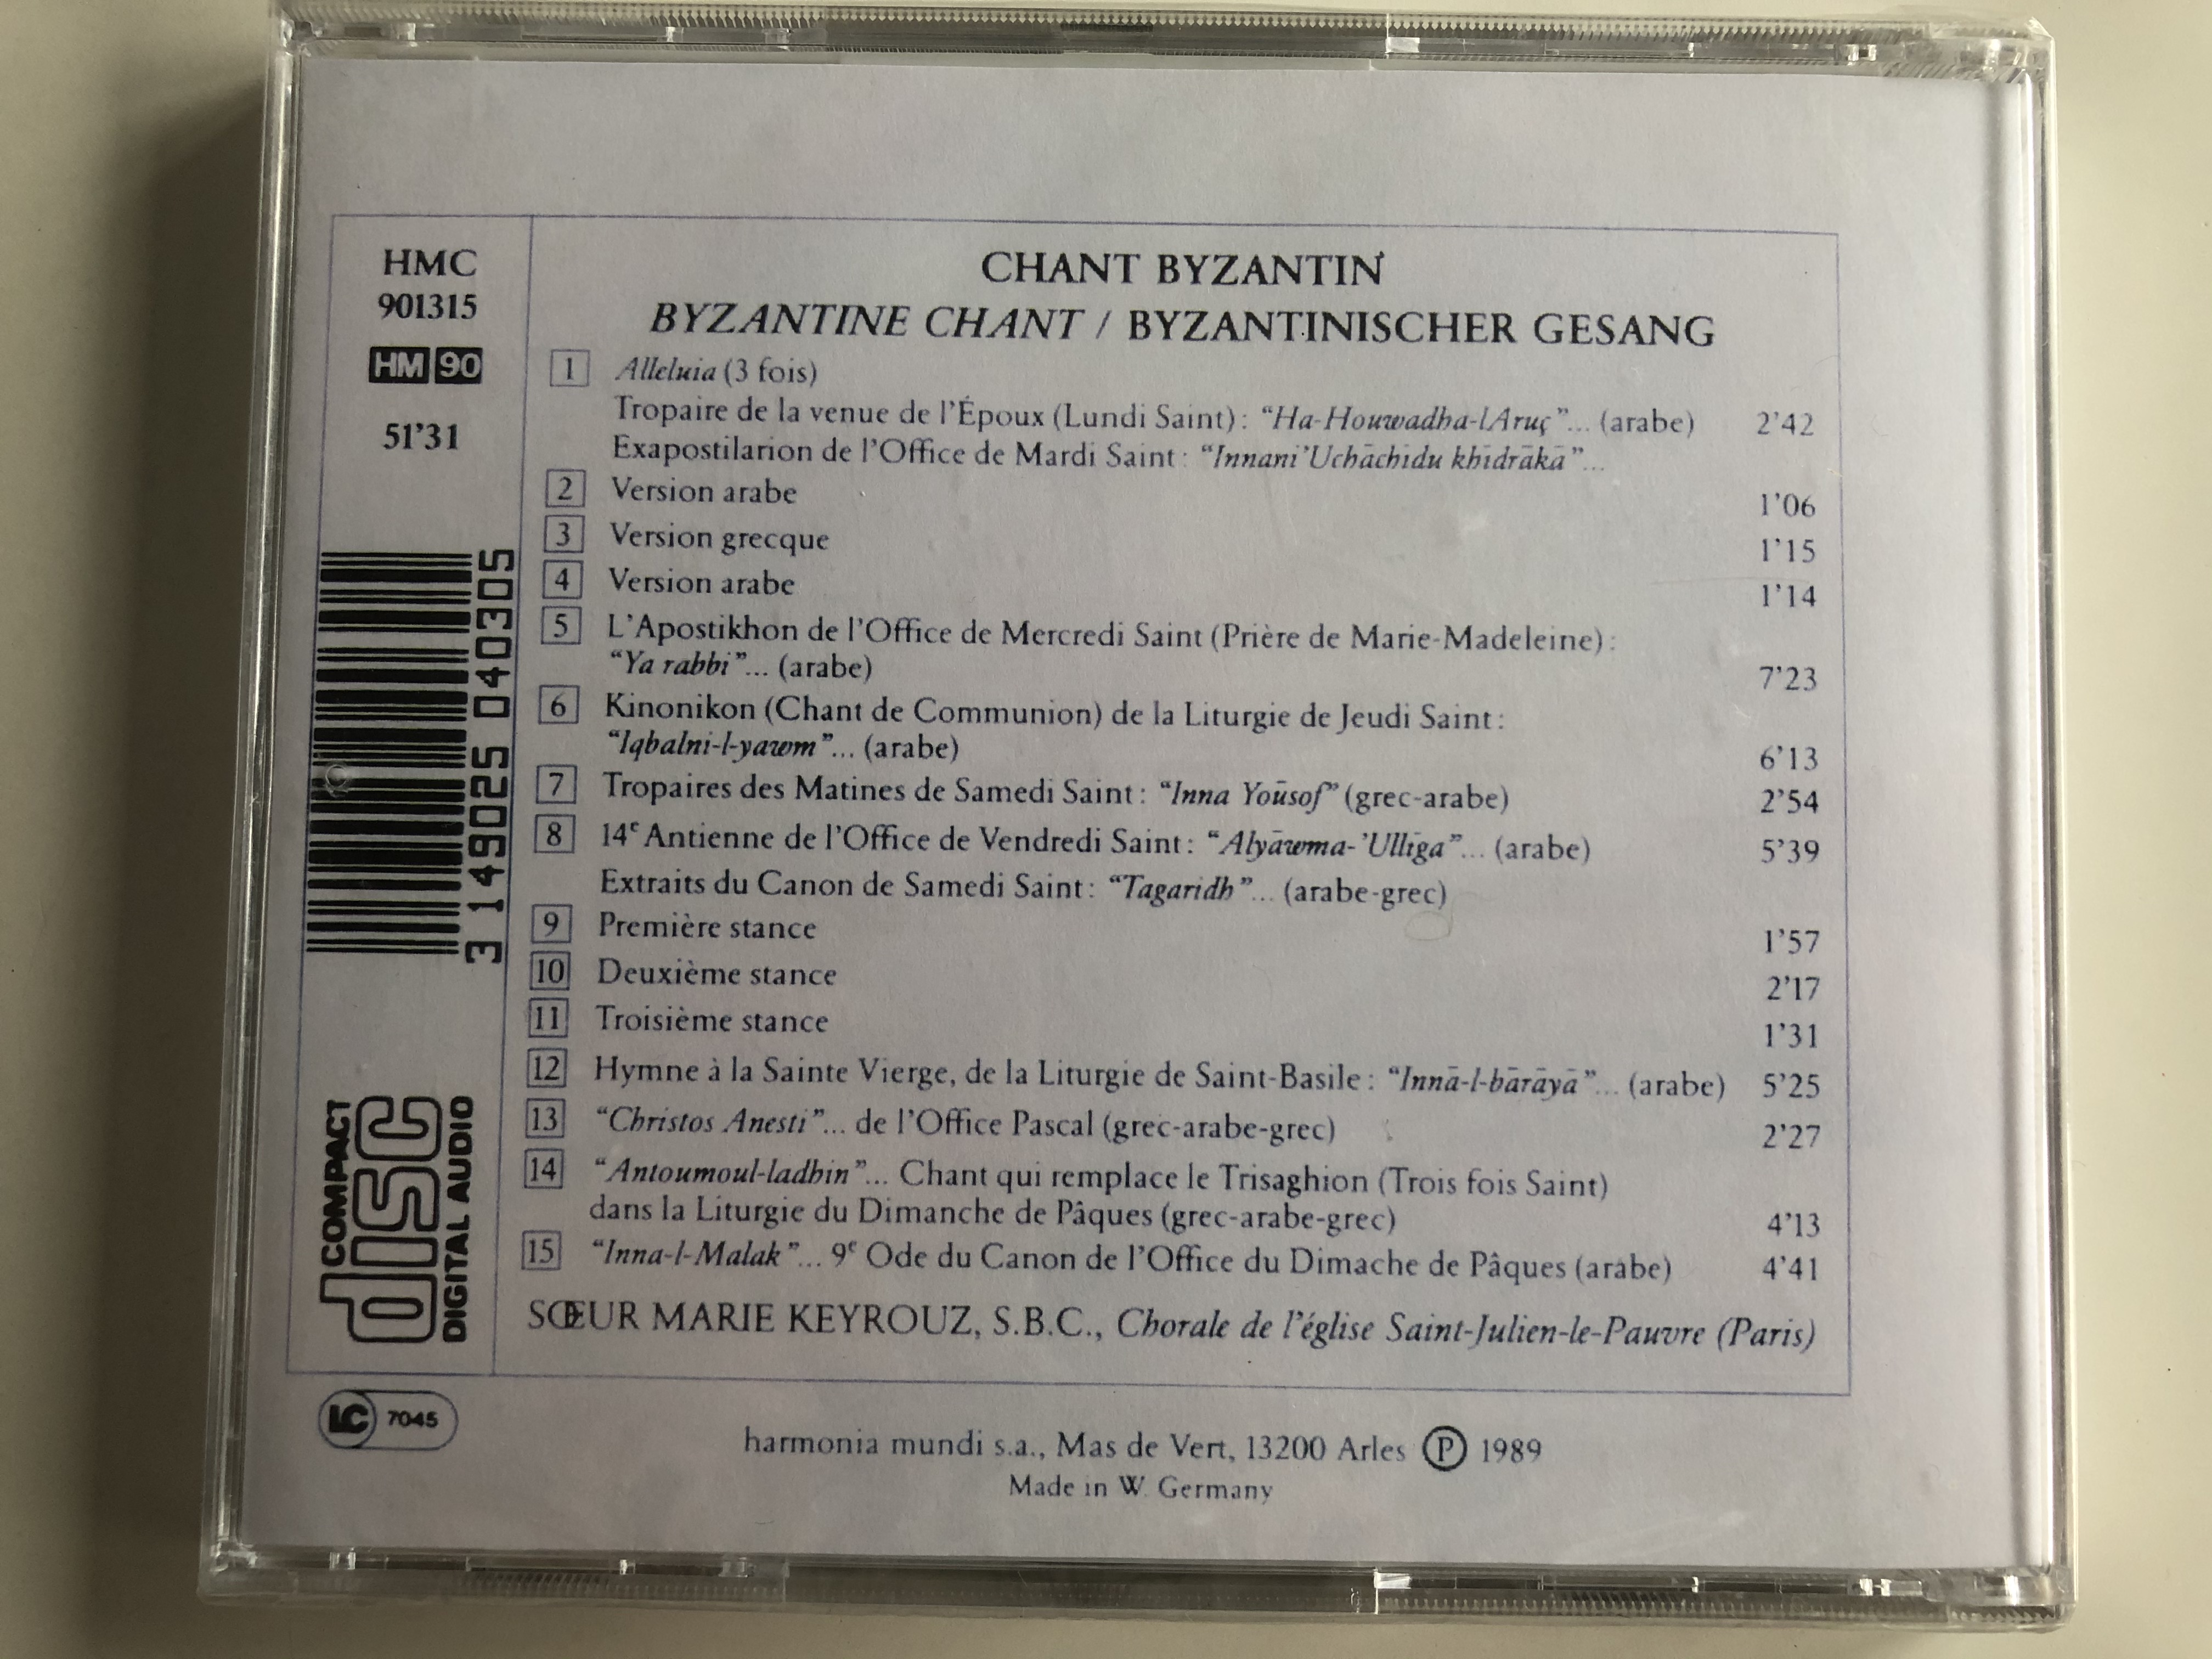 chant-byzantin-passion-et-r-surrection-s-ur-marie-keyrouz-s.b.c.-harmonia-mundi-audio-cd-1989-hmc-901315-2-.jpg